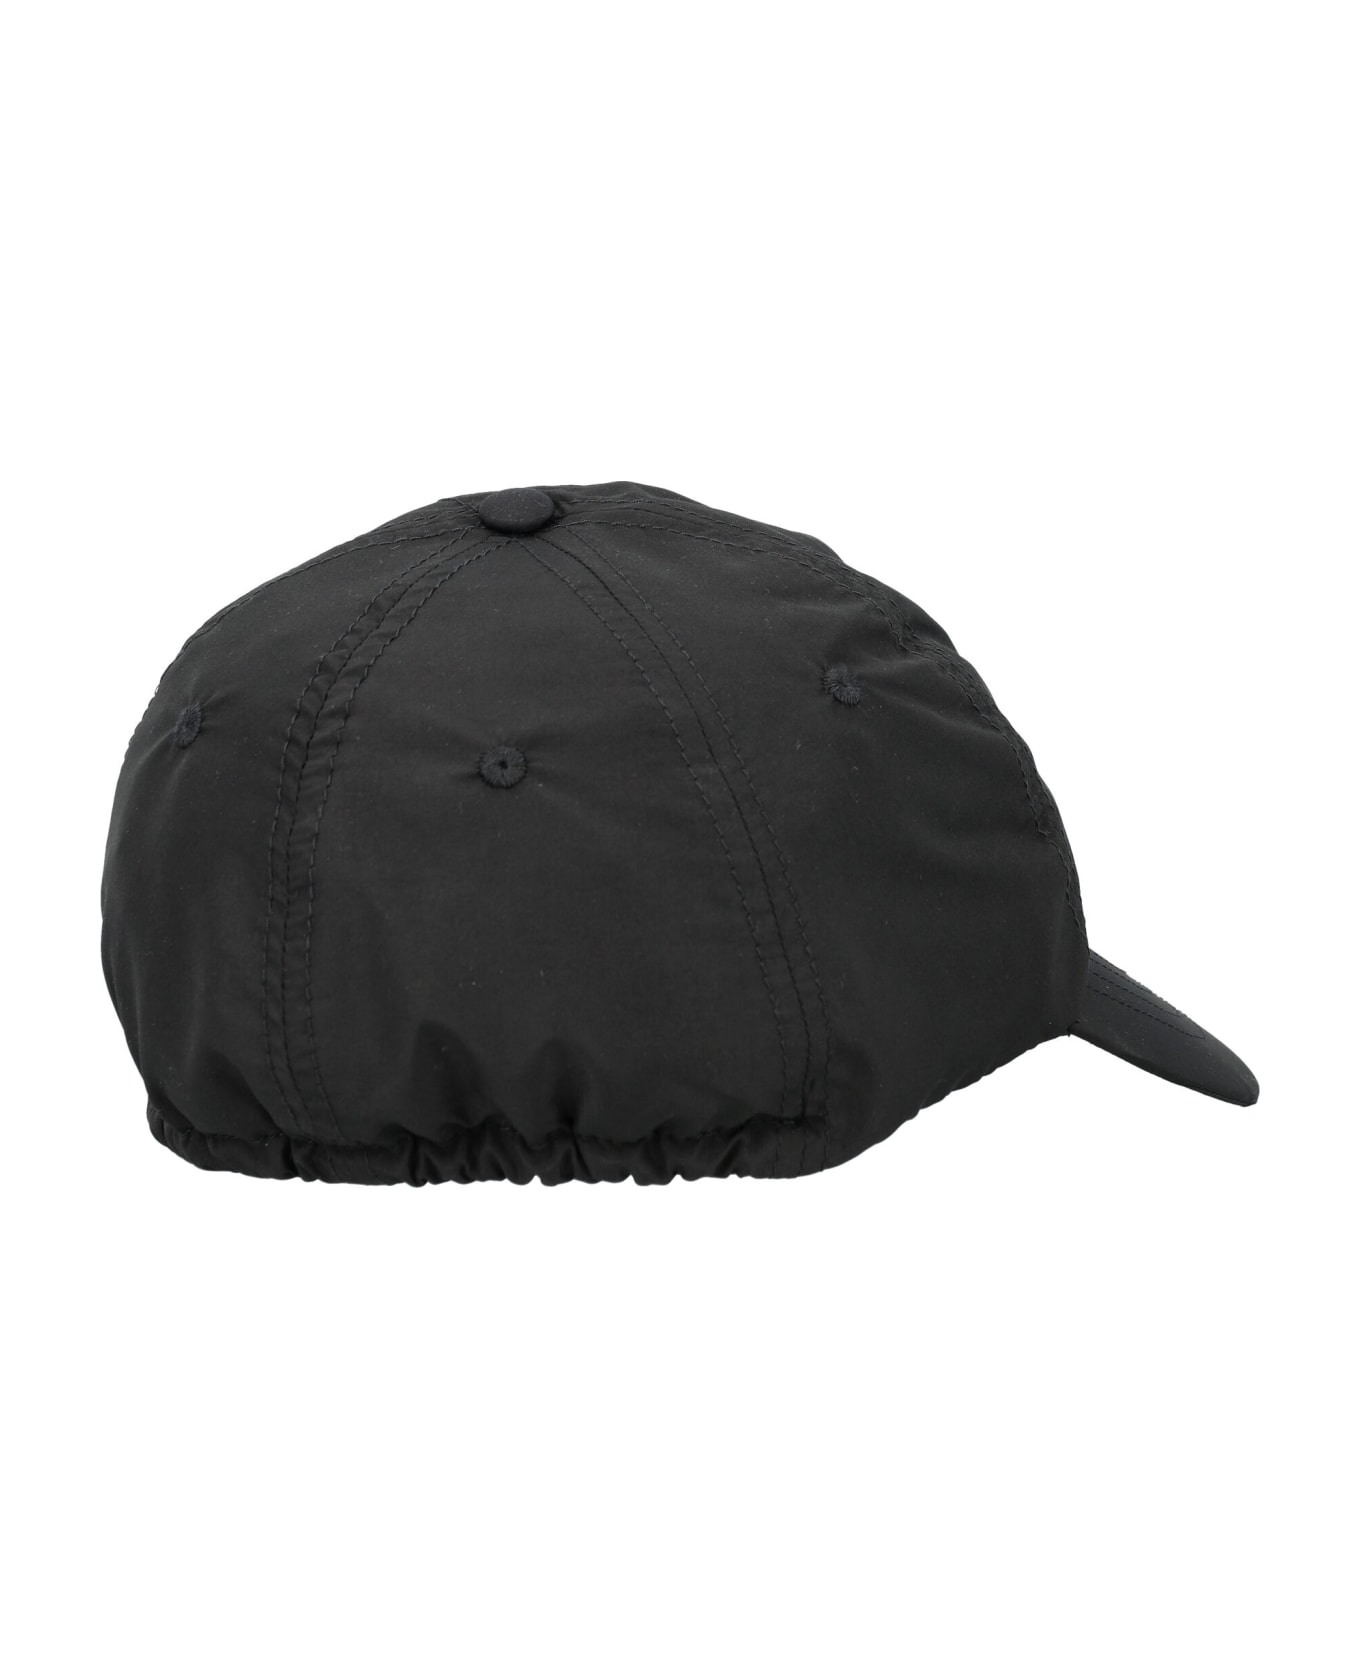 Fear of God Baseball Cap - BLACK 帽子